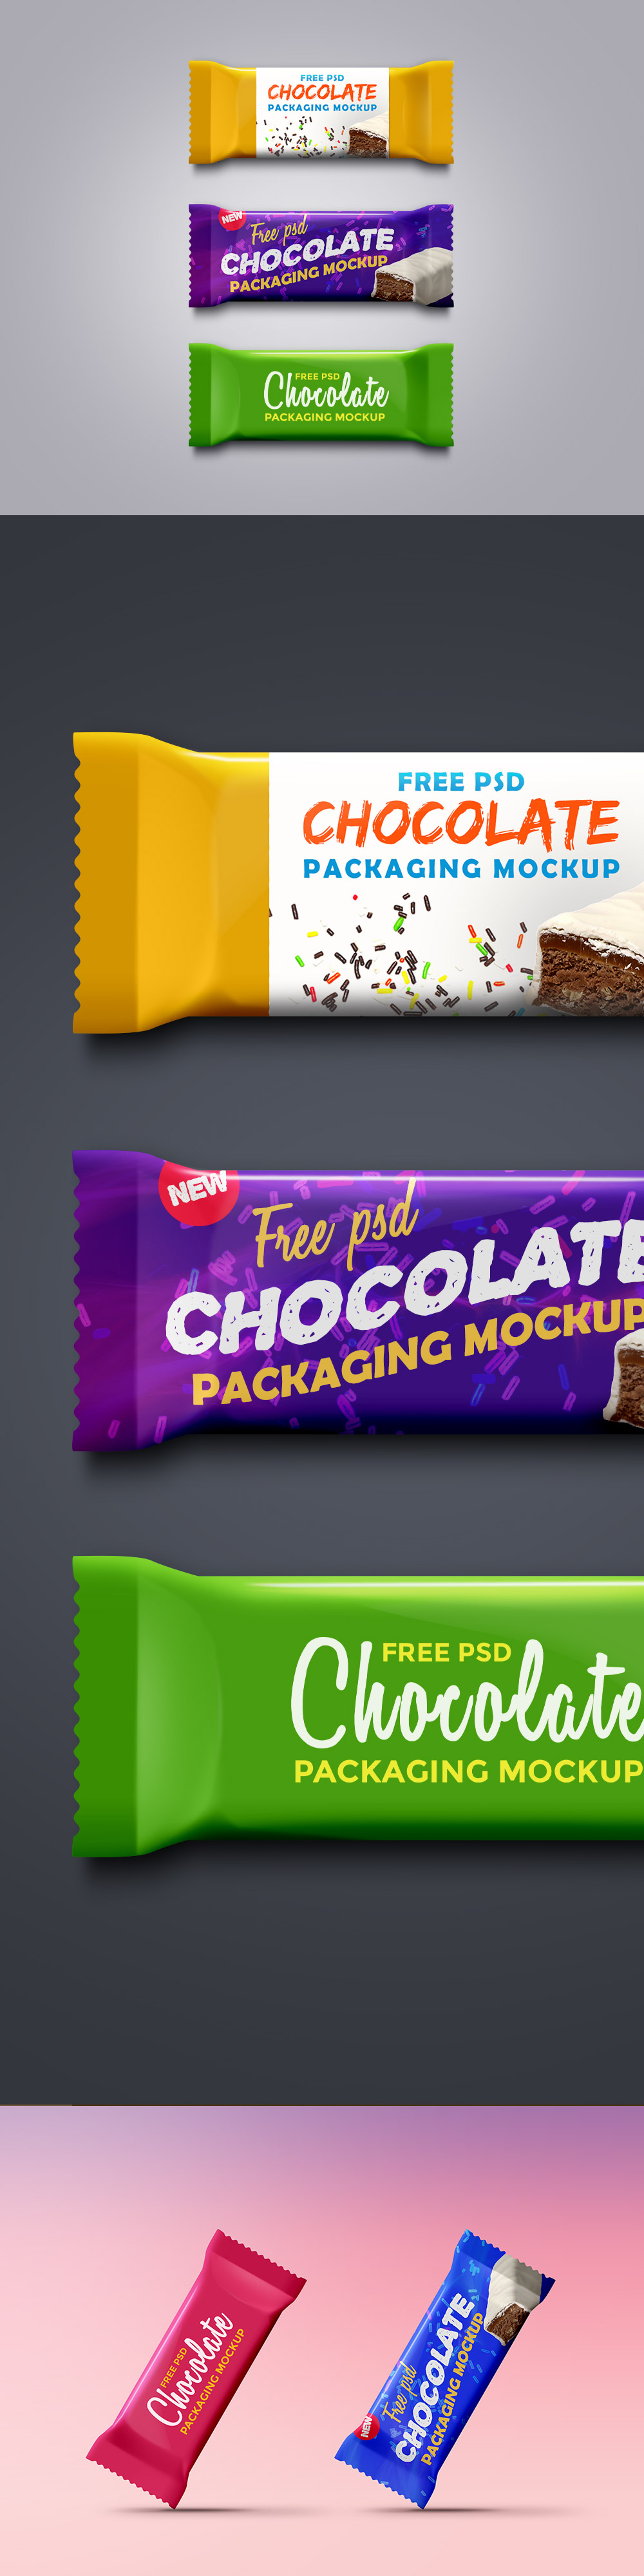 Download Chocolate Packaging MockUp PSD Template - Responsive Joomla and Wordpress themes